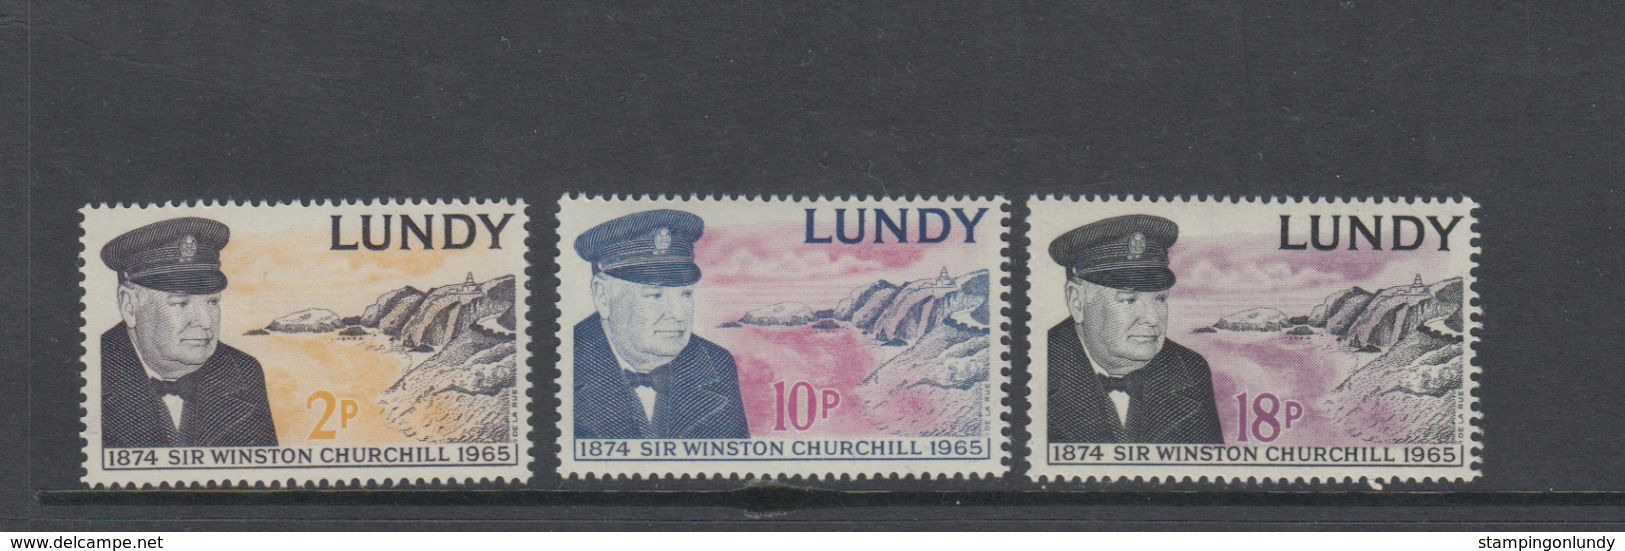 #L55 Great Britain Lundy Island Puffin Stamp 1965 Churchill Mint Set - Sir Winston Churchill